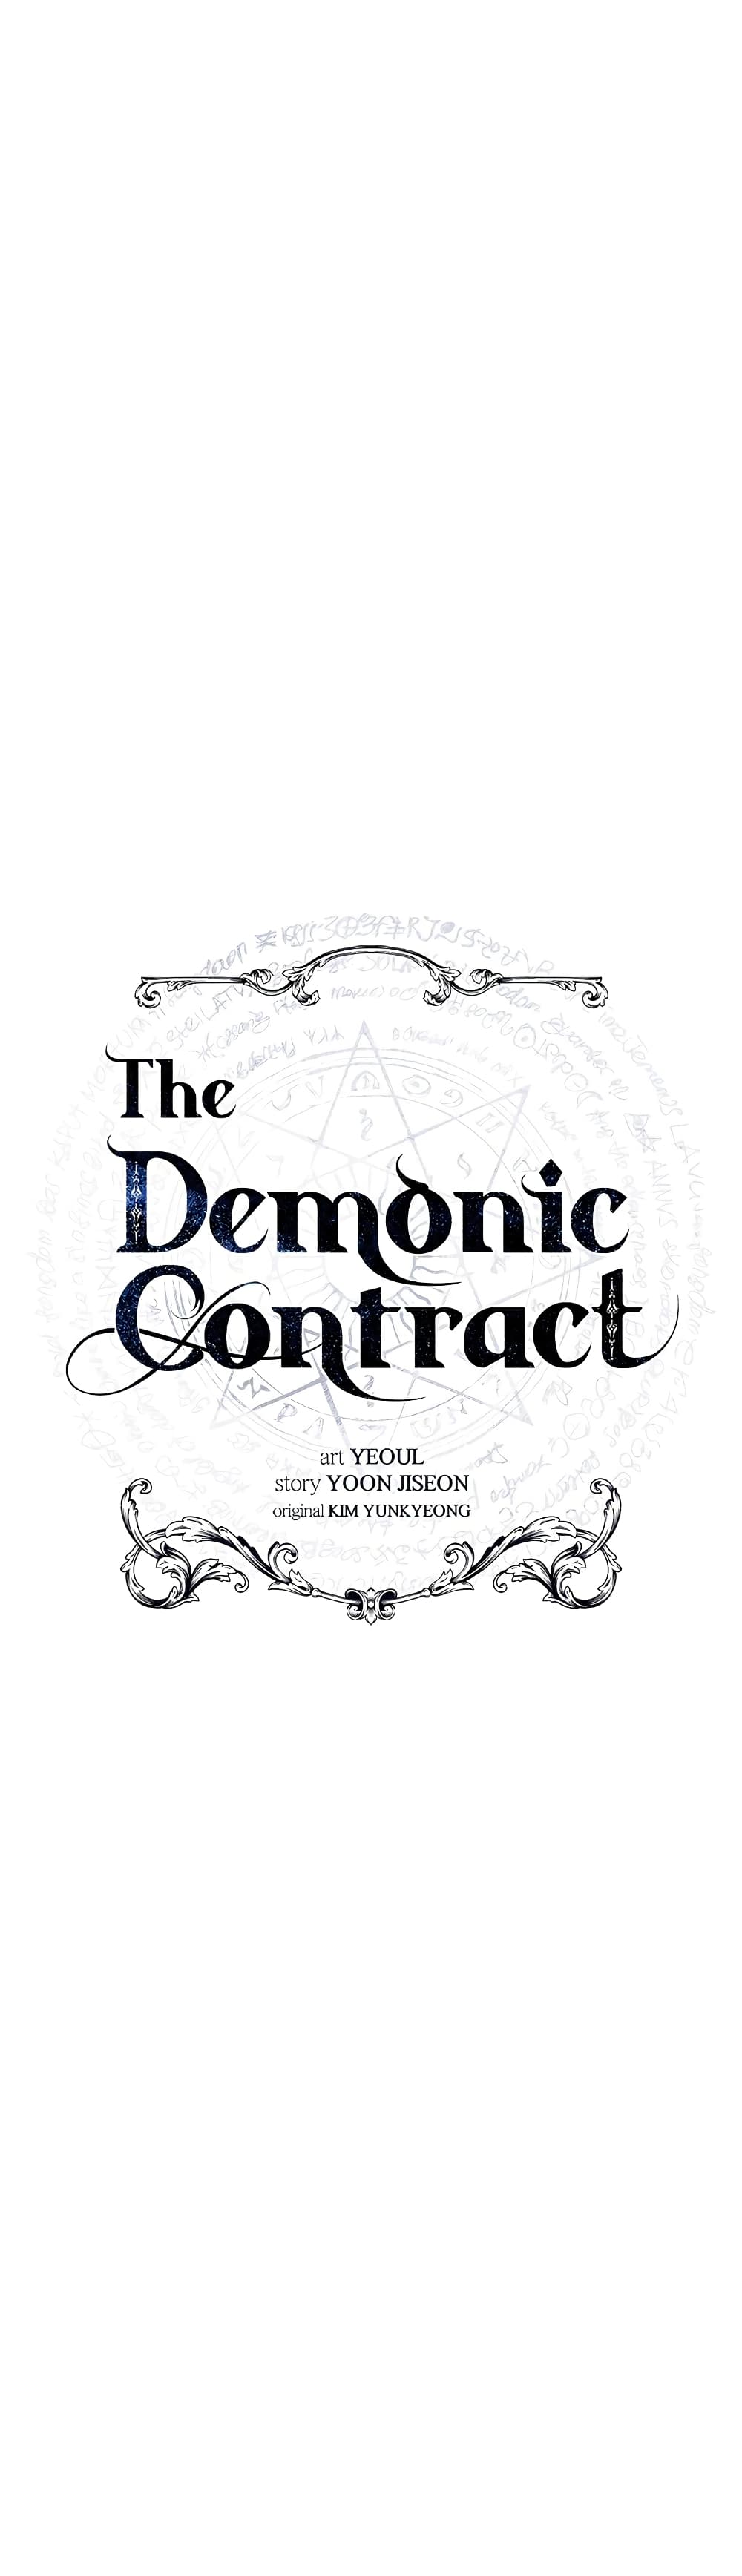 The Demonic Contract 51 (11)